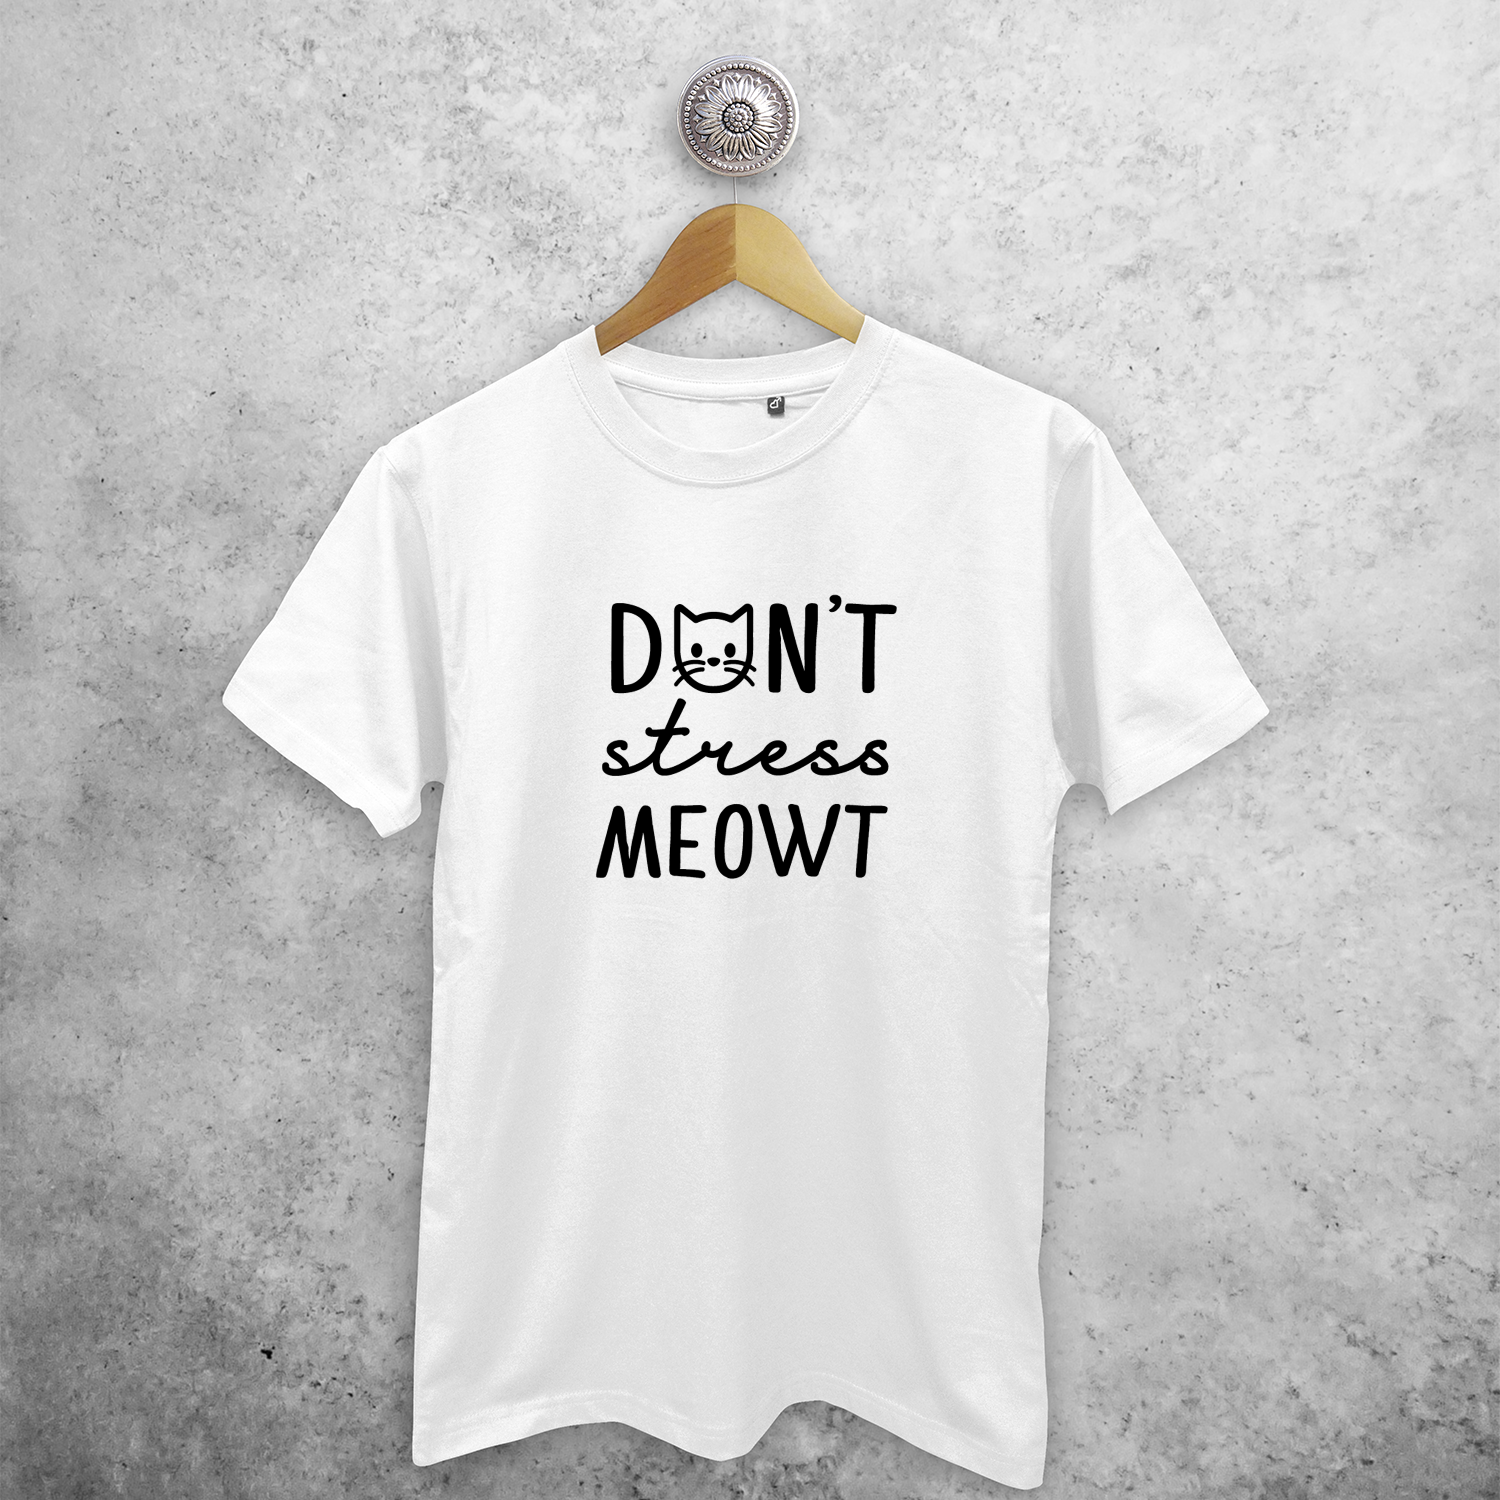 'Don't stress meowt’ adult shirt